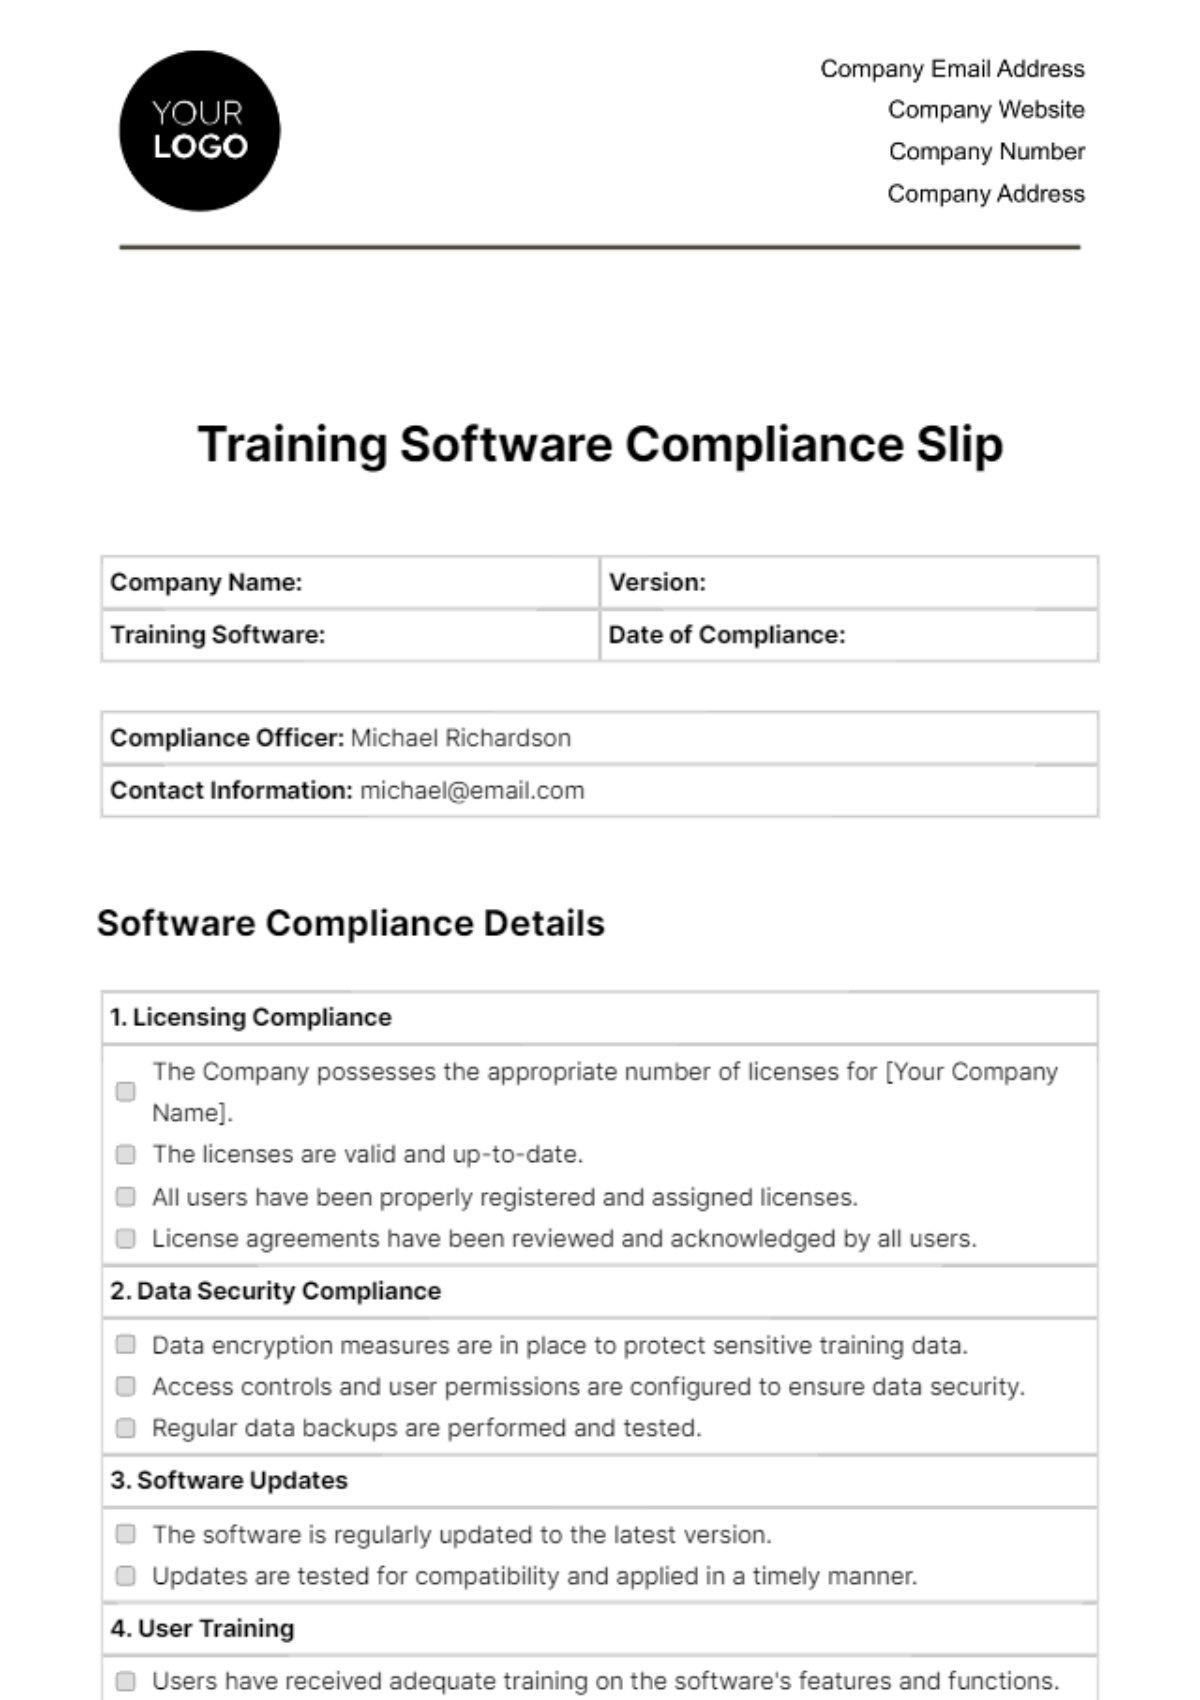 Training Software Compliance Slip HR Template